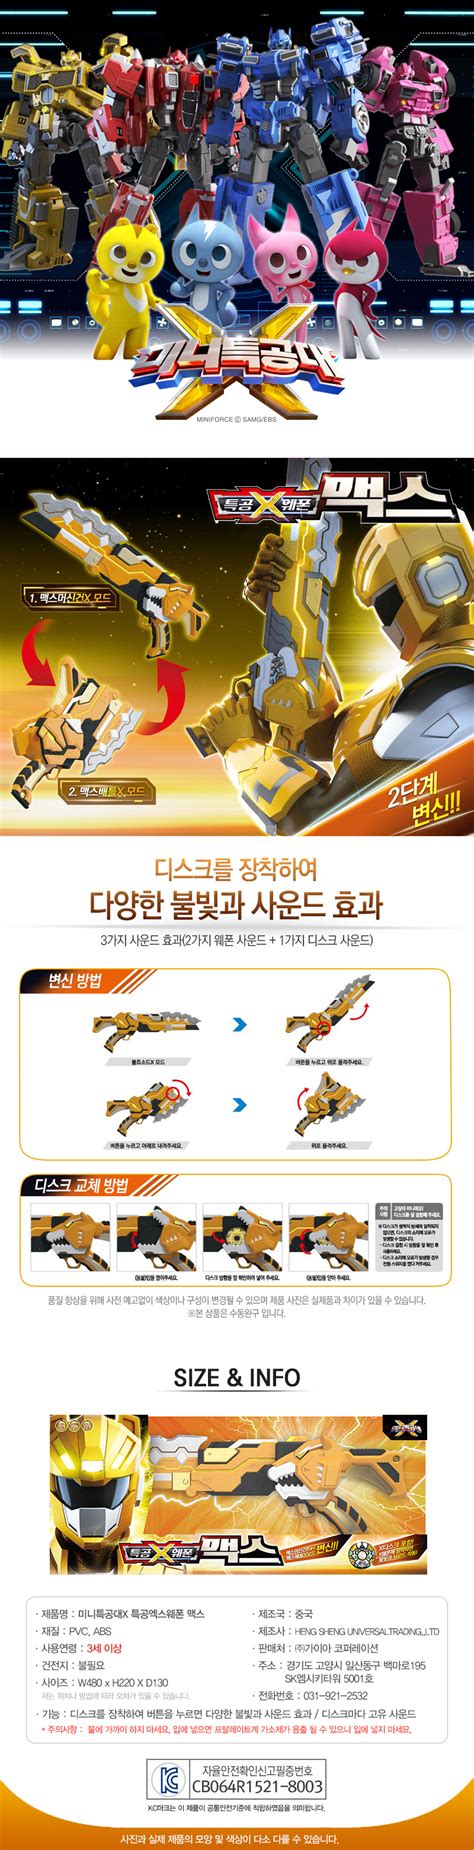 Miniforce Mini Force X Ranger Weapon Max Yellow Machine Gun Ax